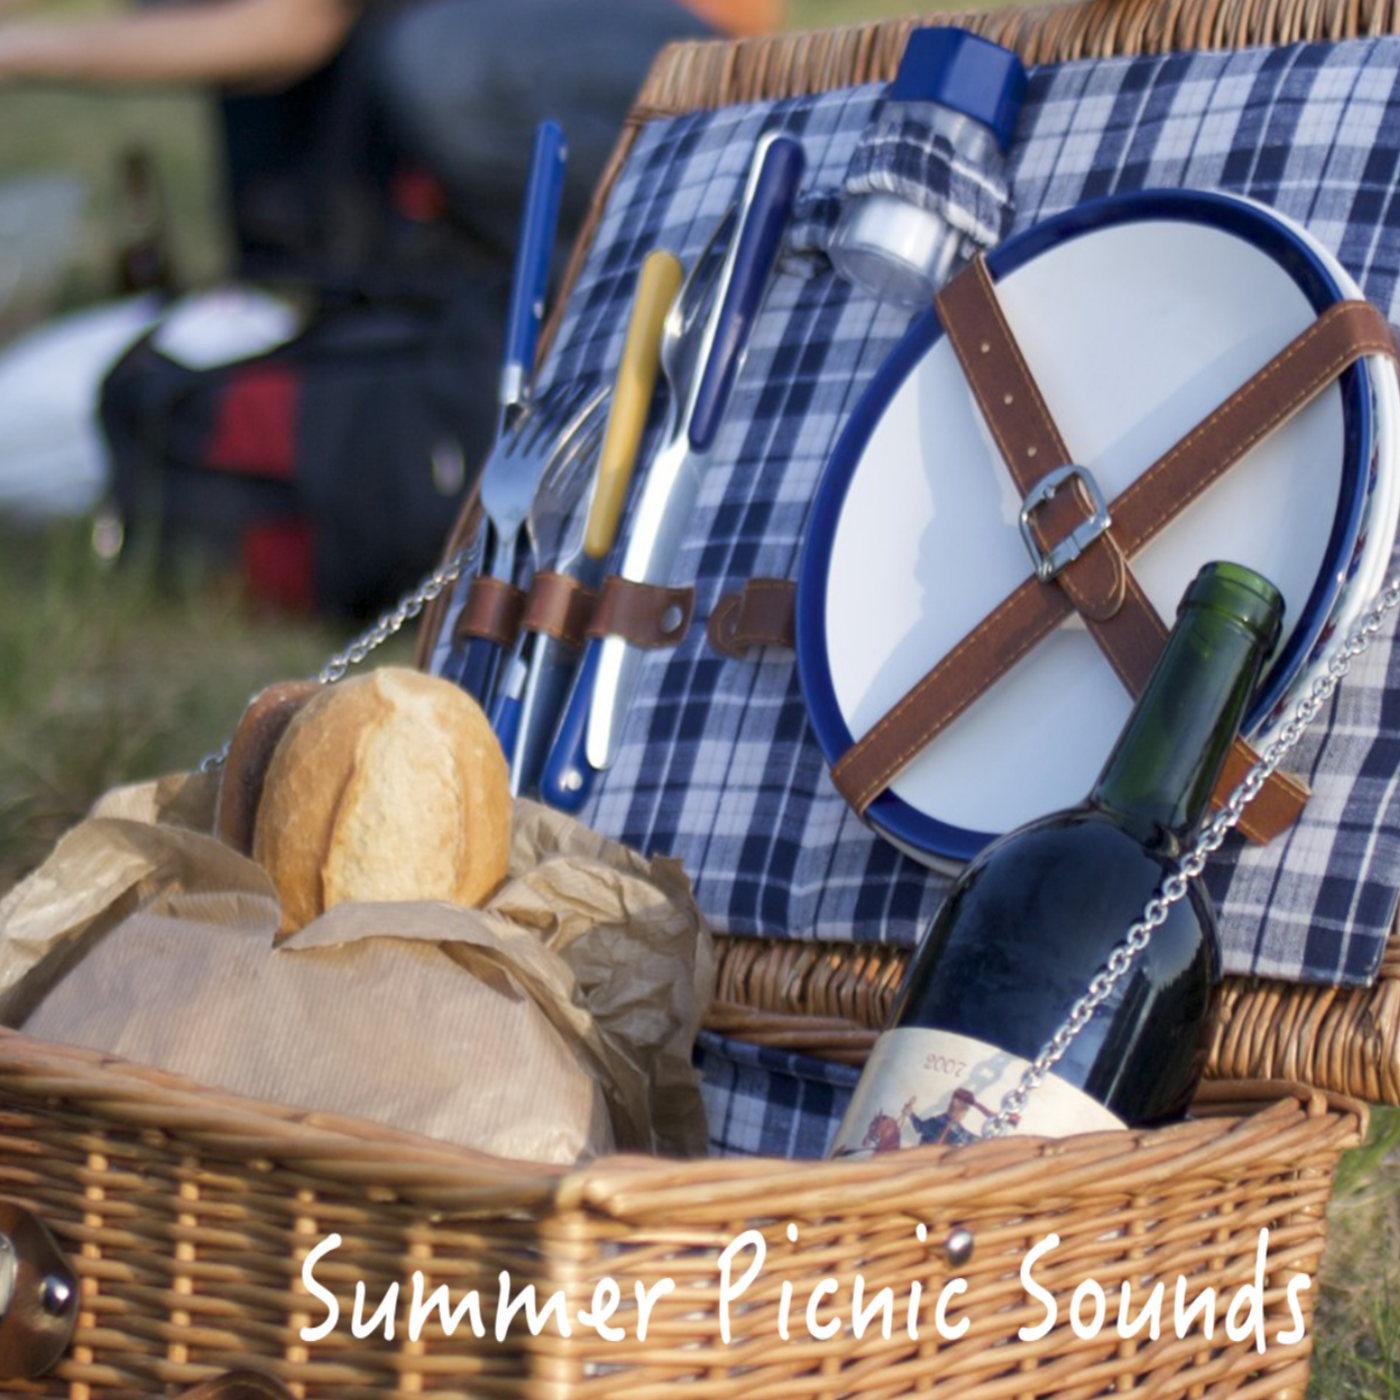 Summer Picnic Sounds